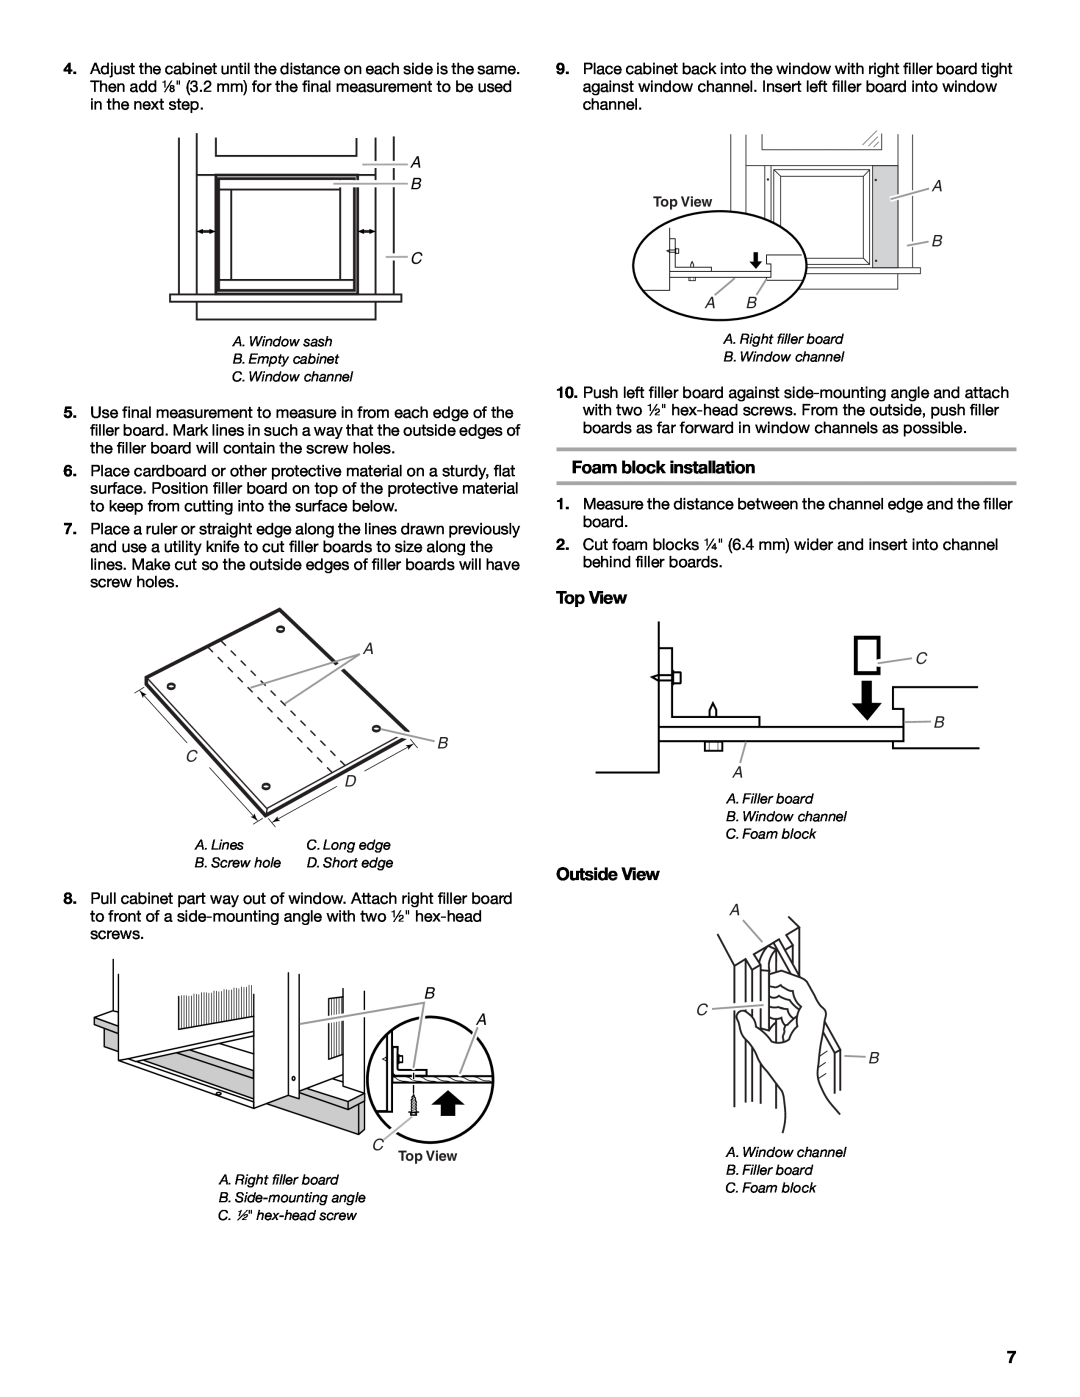 Whirlpool ACE184XR0 manual Foam block installation, Top View, Outside View, A B C, B A C, B Ab, C B A, A C B 